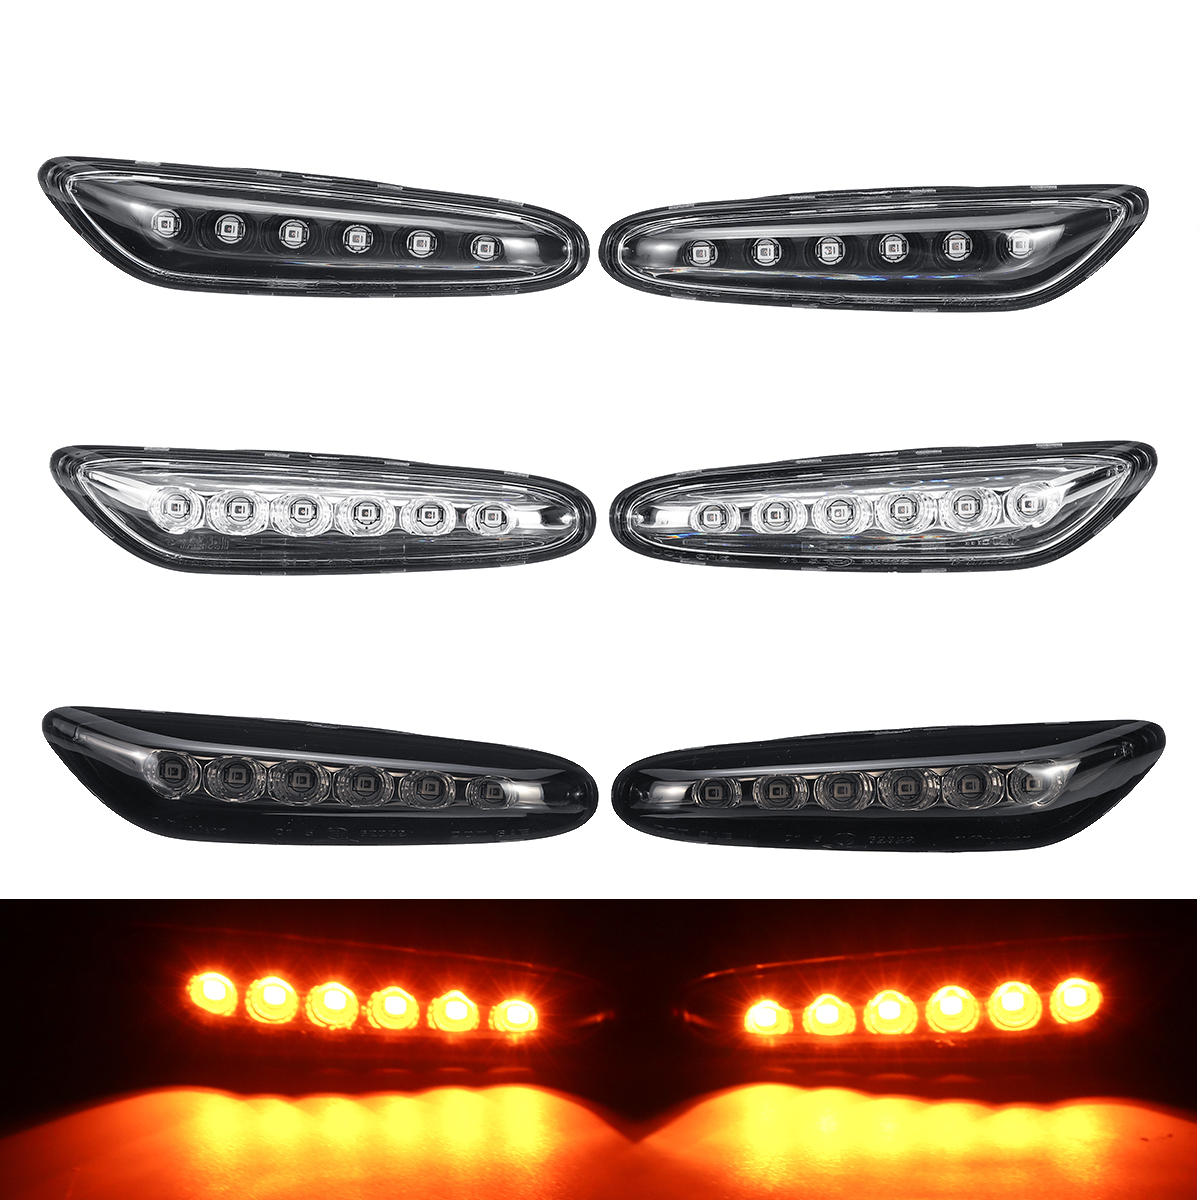 

Светодиодные боковые габаритные фонари Повторители Лампы Желтые пары для BMW E46 E60 E81 E83 E87 E90 E91